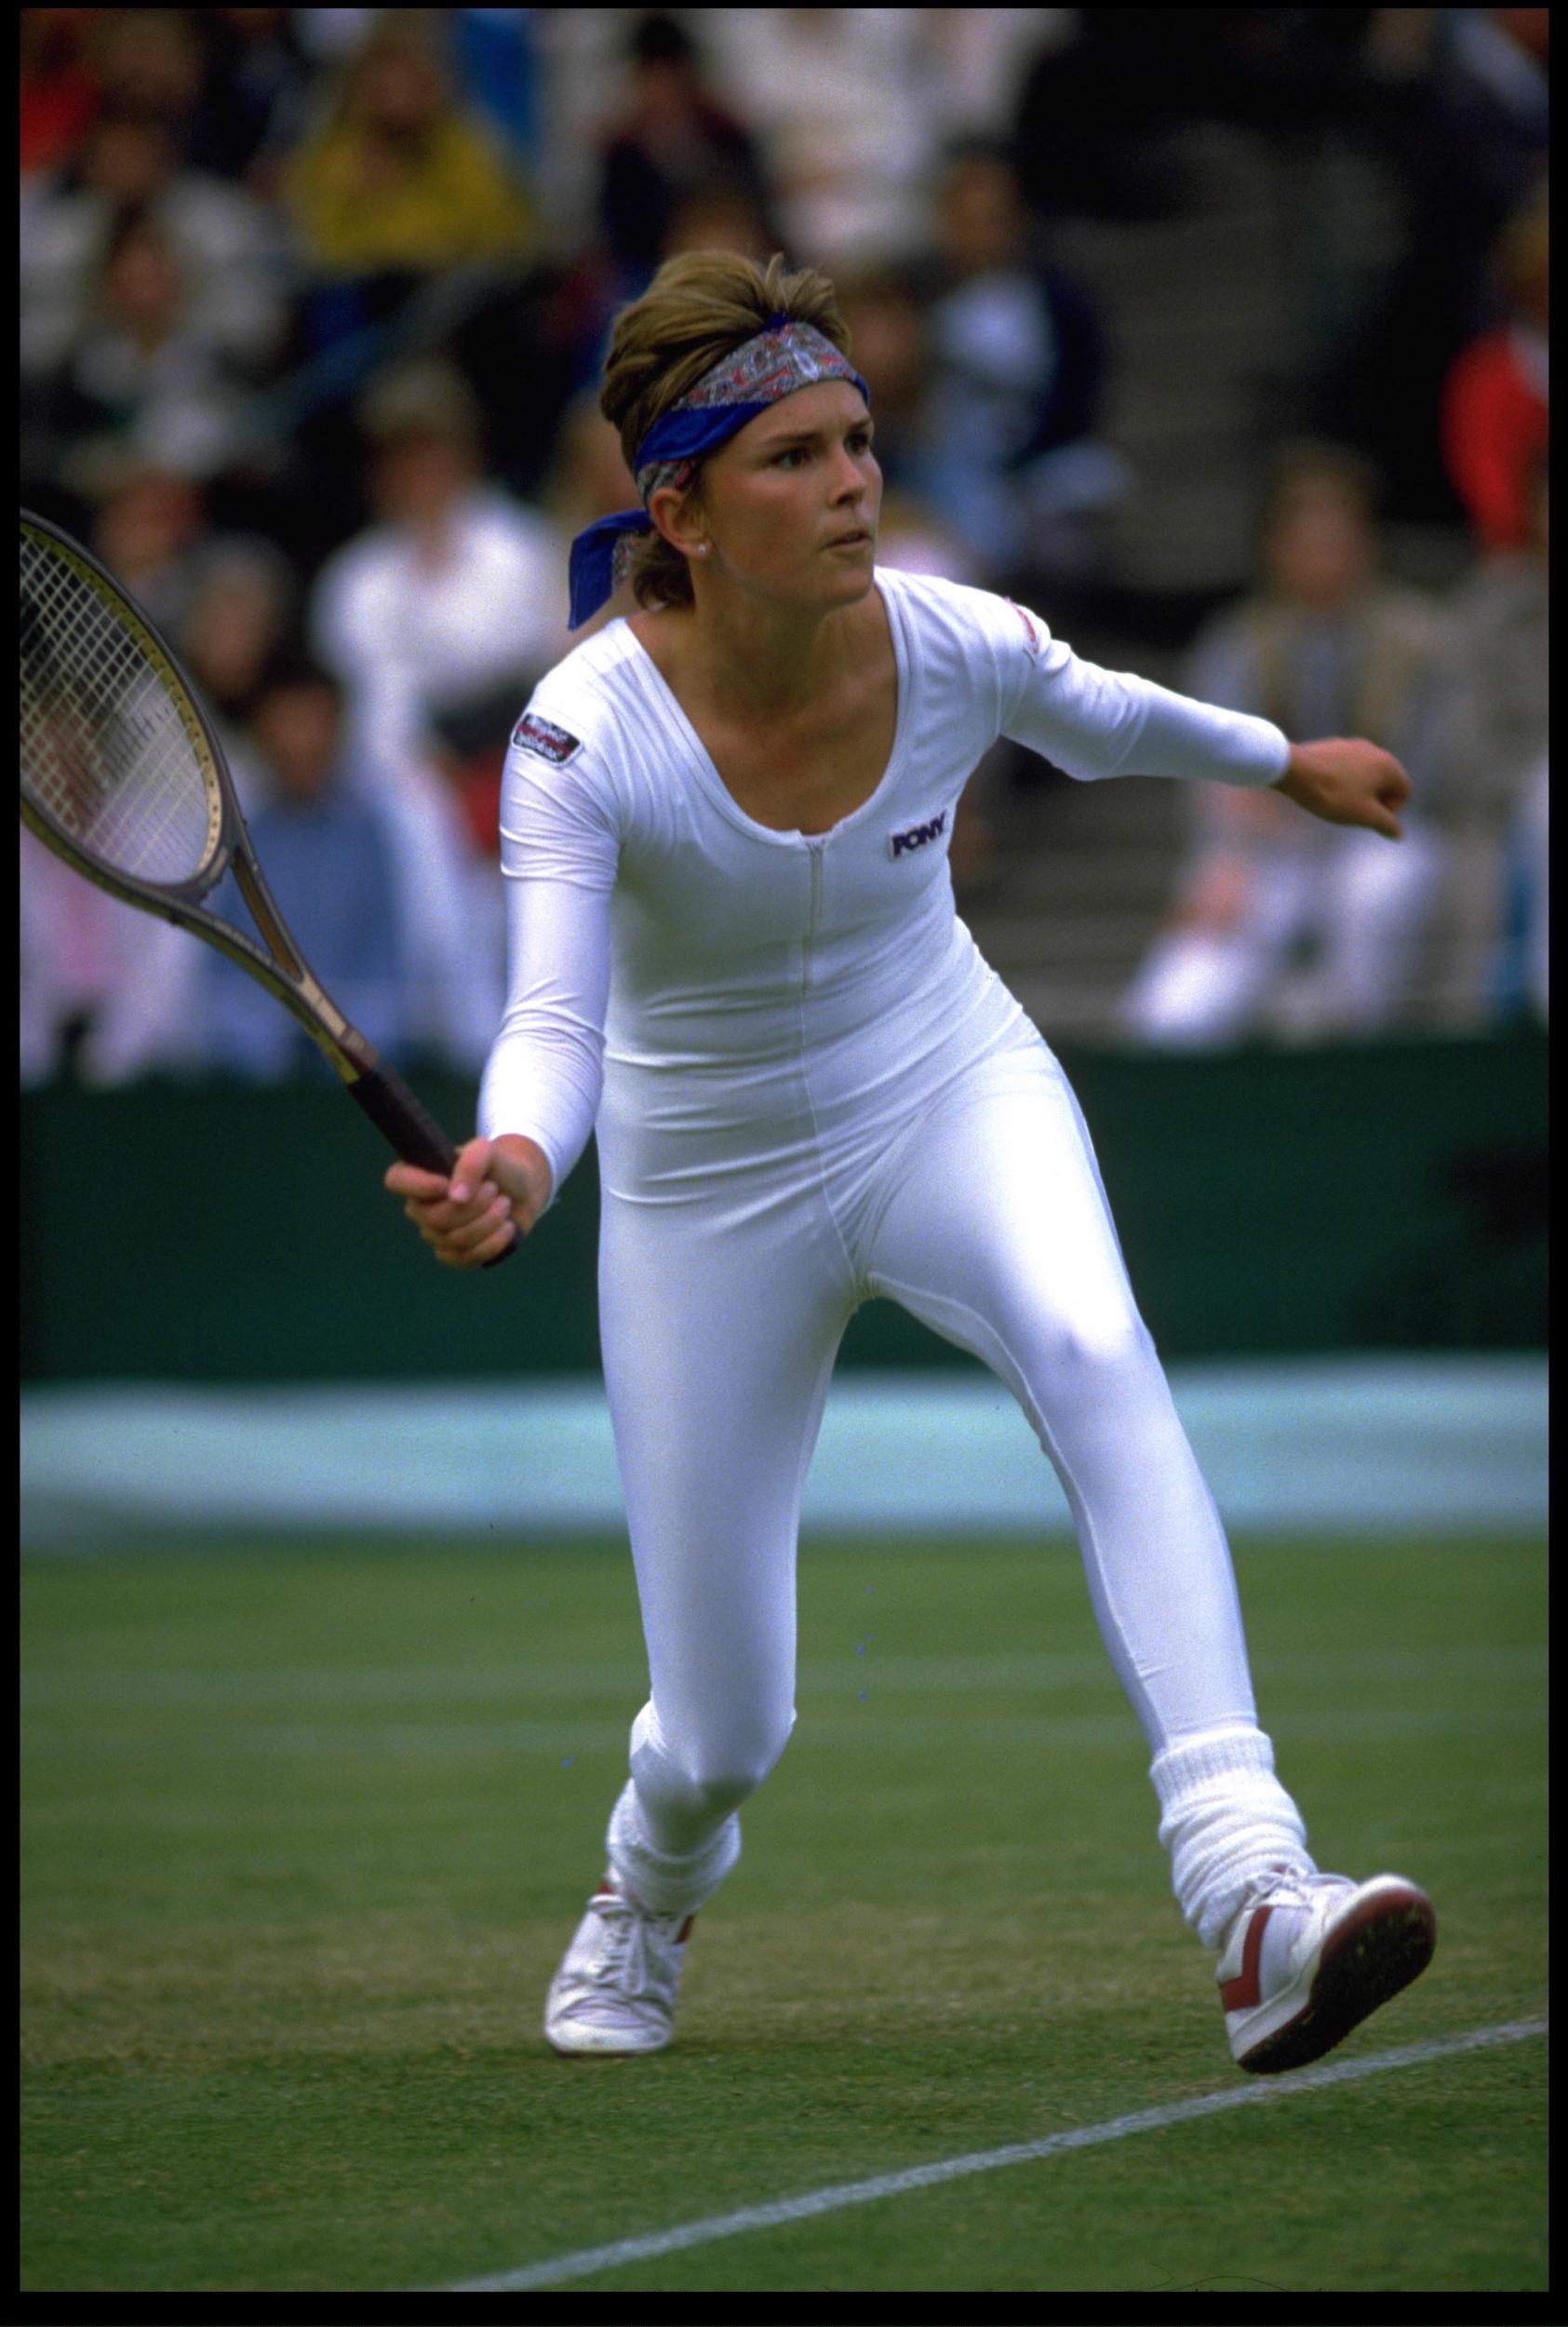 Report: Venus Williams' pink bra violated Wimbledon's 'all white